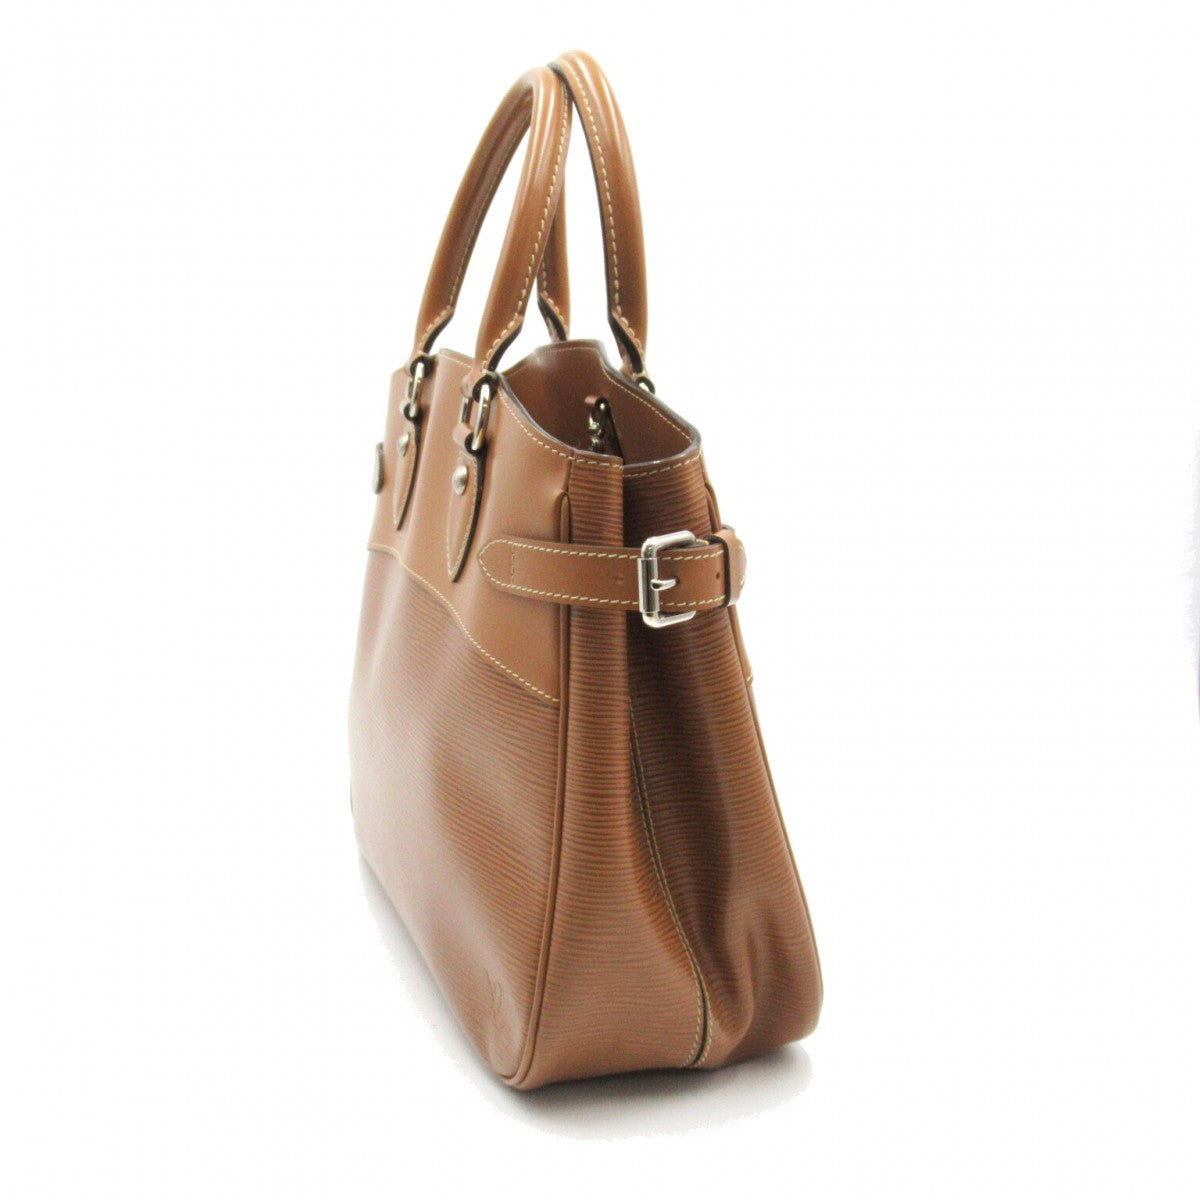 Louis Vuitton Epi Passy PM Leather Handbag M59261 in Excellent condition